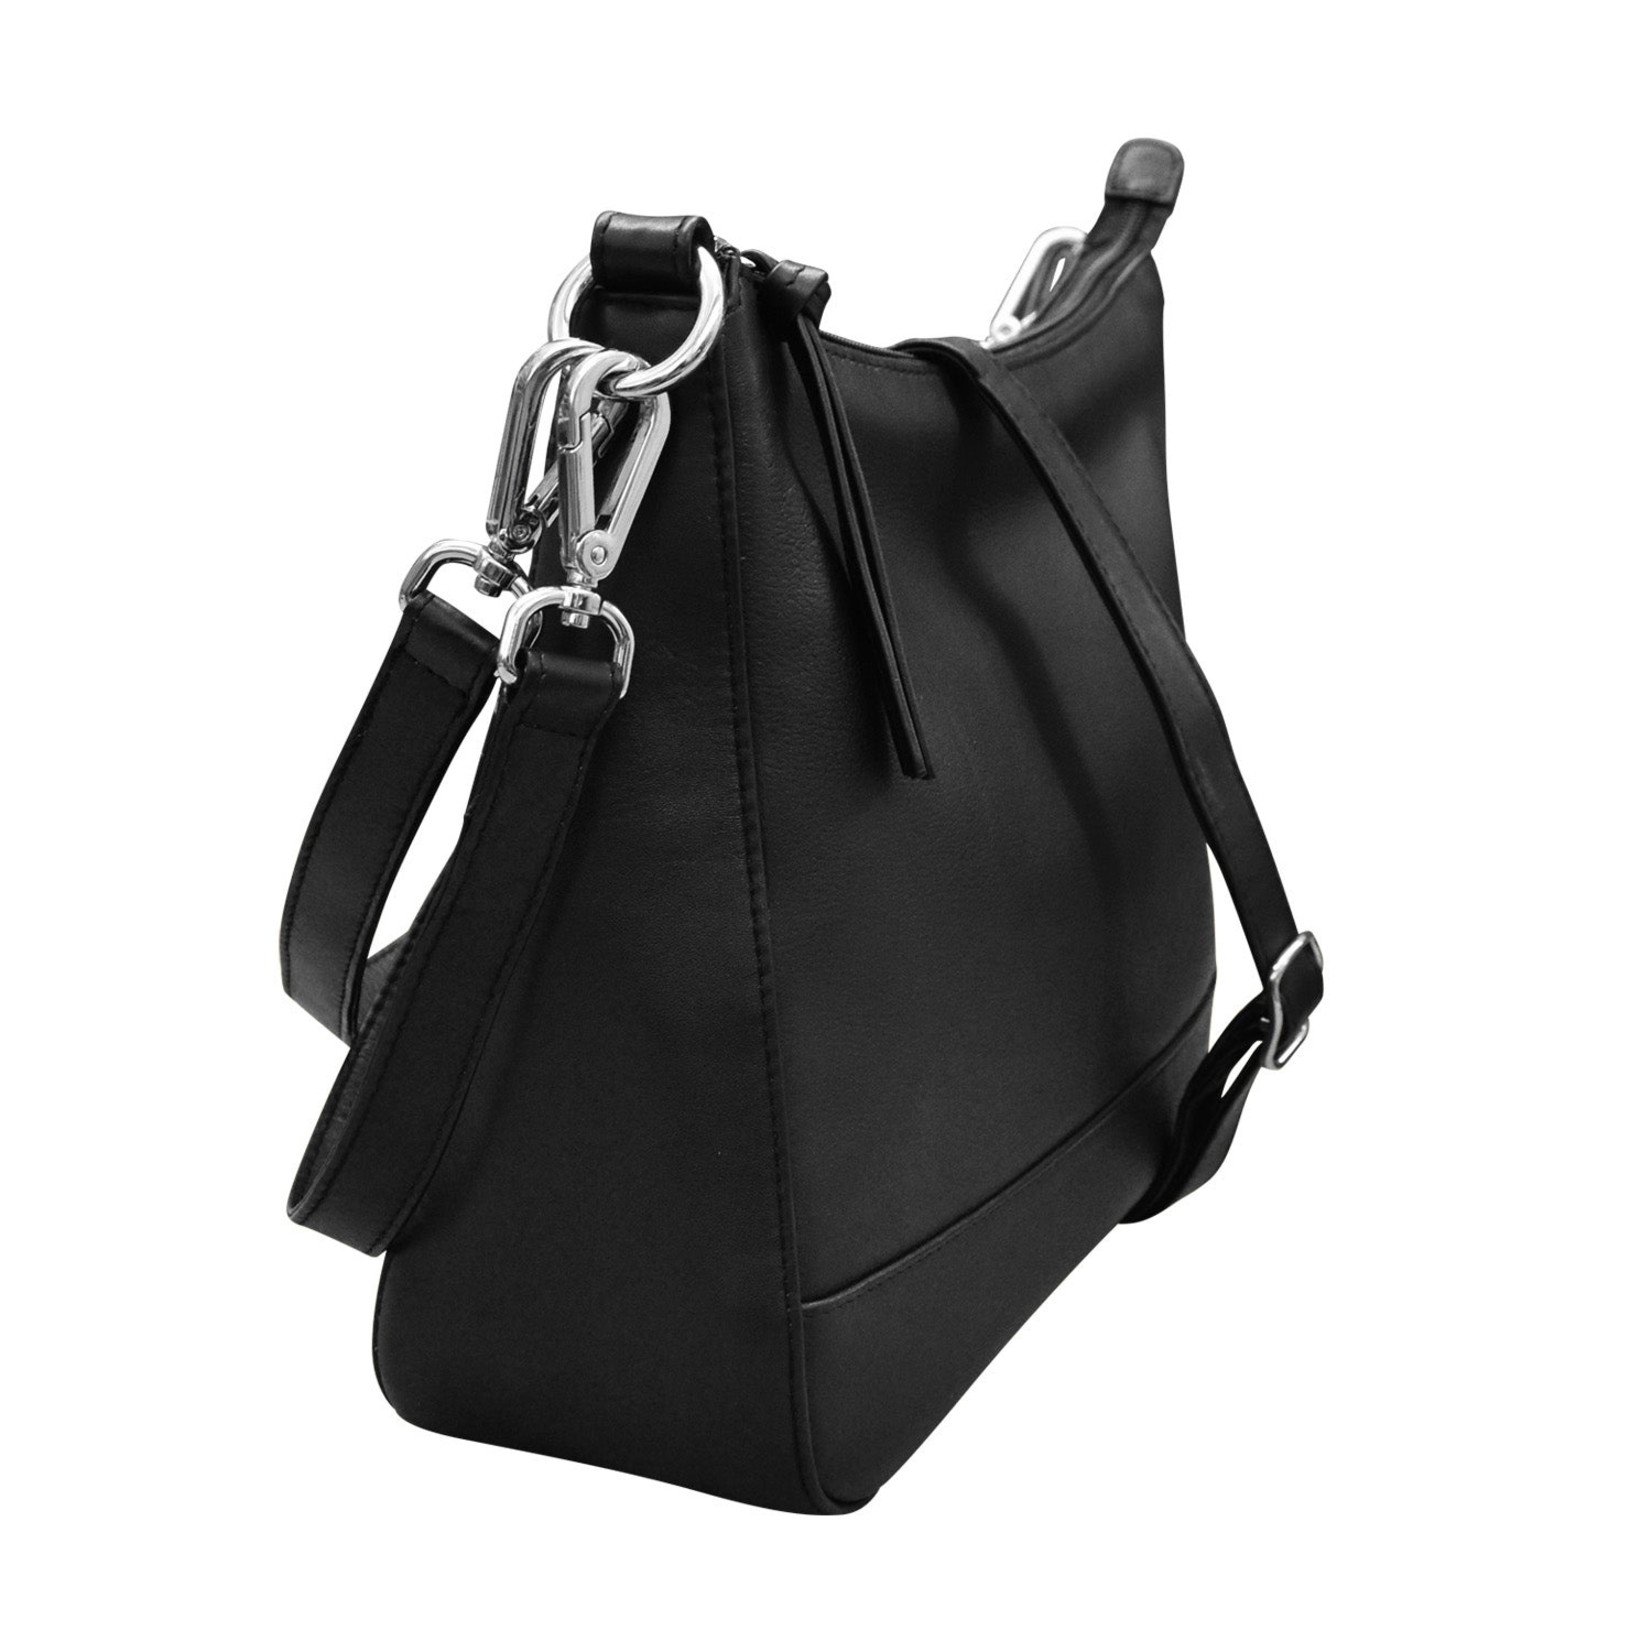 Leather Handbags and Accessories 6091 Black - Zip Top Hobo